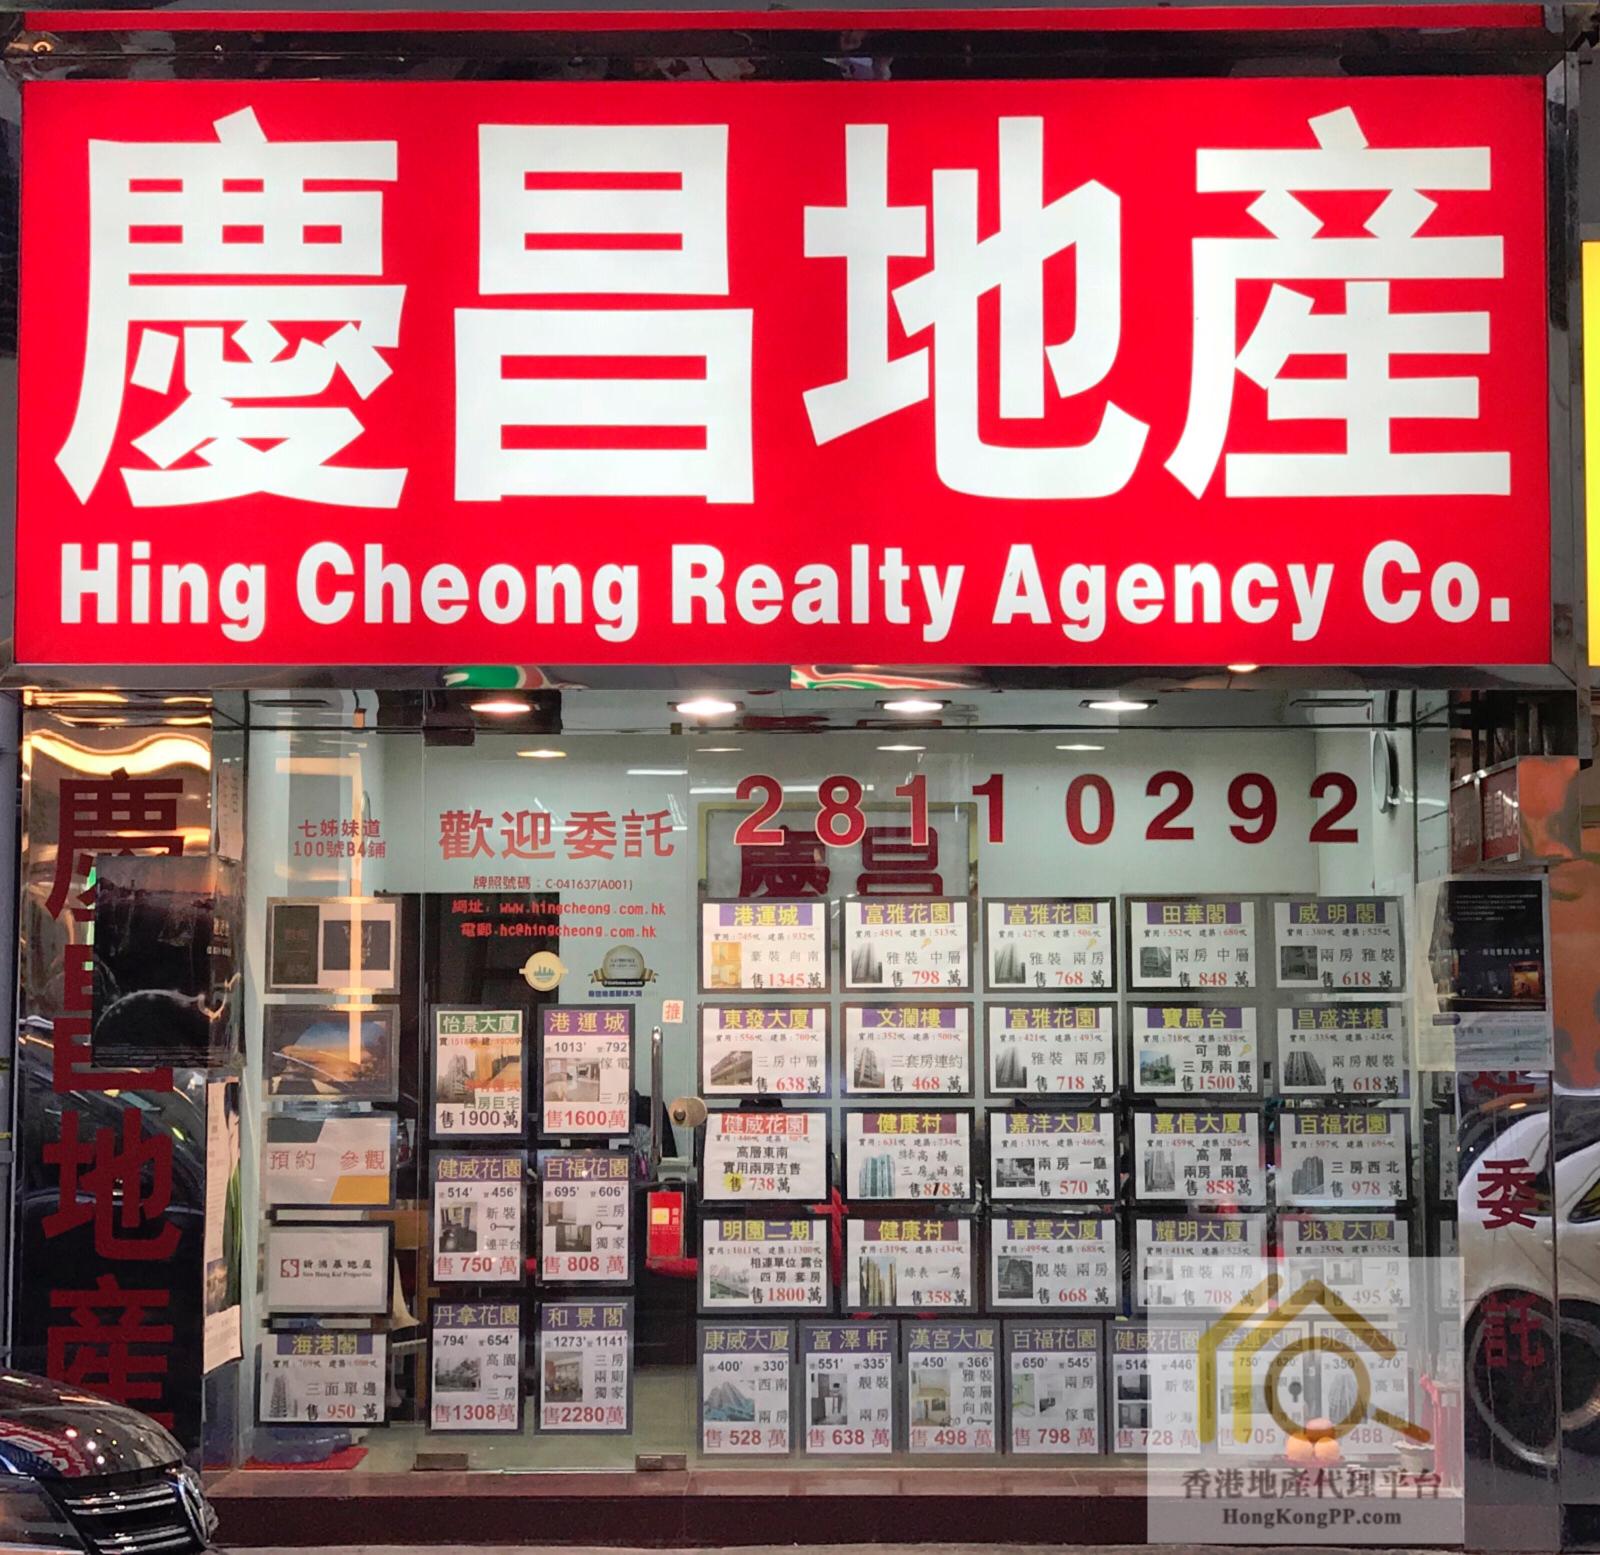 ShopEstate Agent: 慶昌地產代理公司